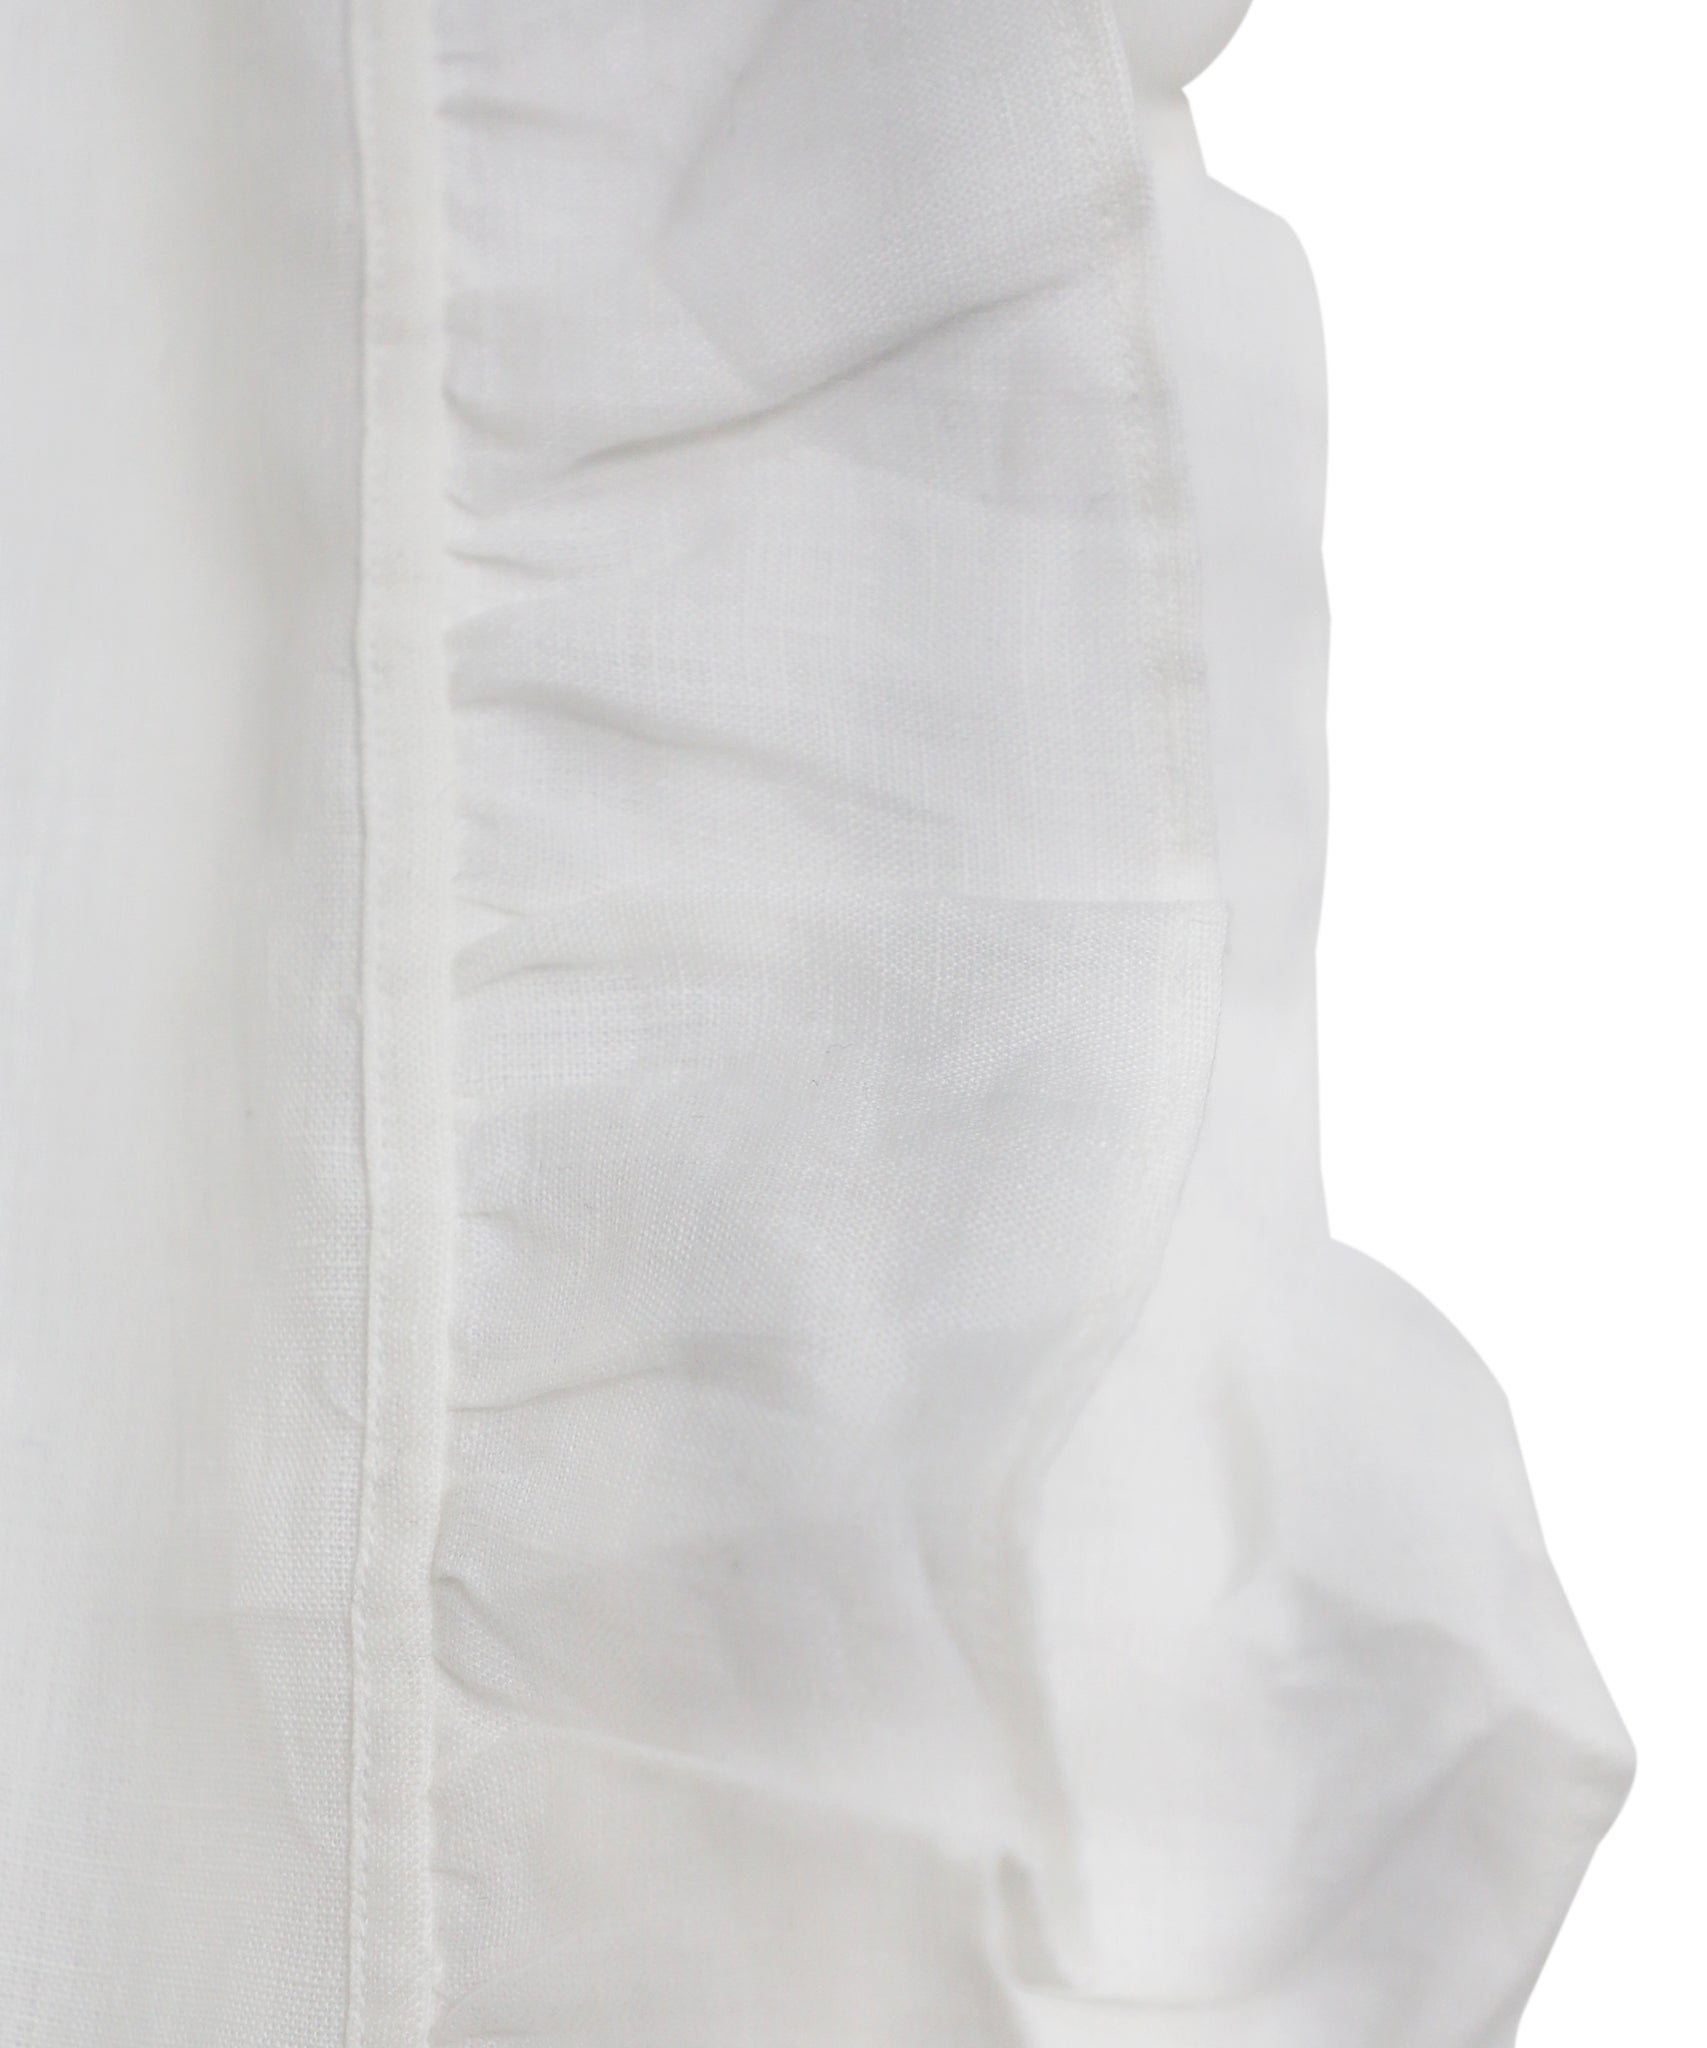 White Ruffled Cloth Napkins Bulk, White With Ruffle, Linen Set